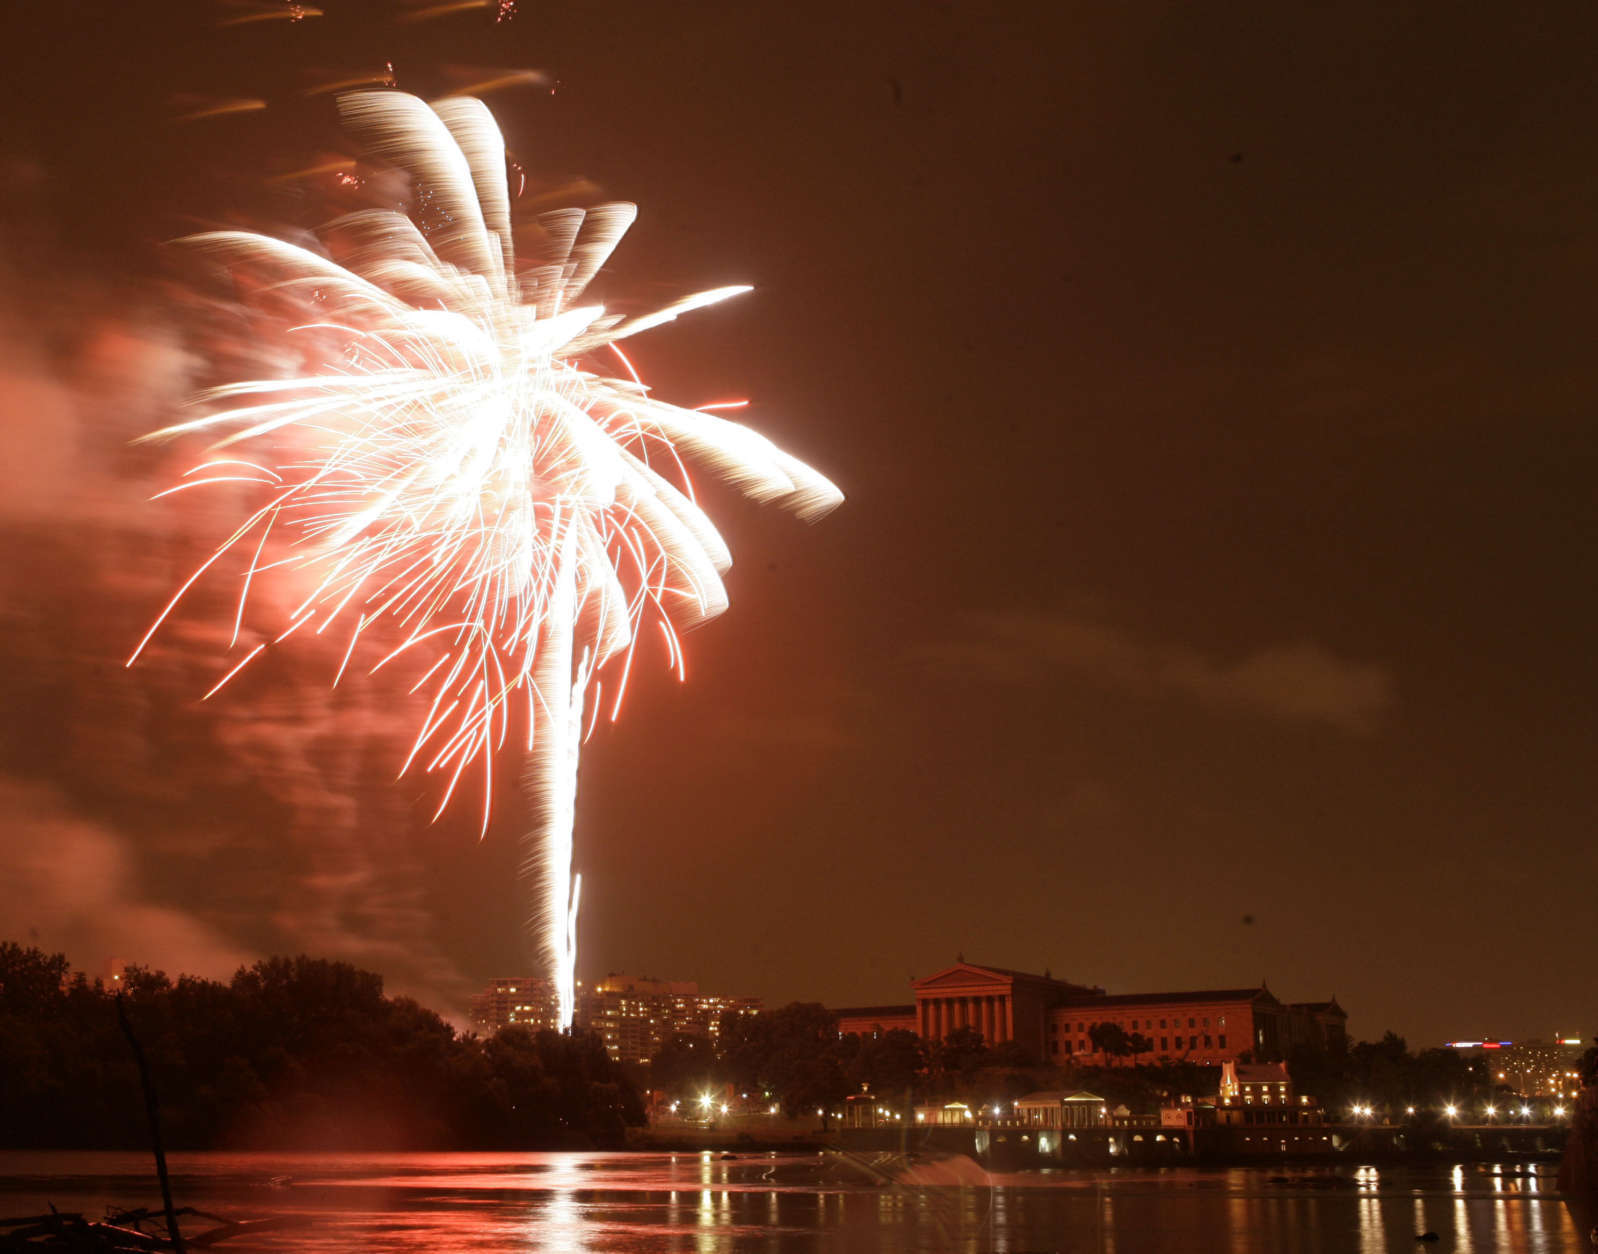 Fireworks explode over the Philadelphia Museum of Art during an Independence Day celebration in Philadelphia on Wednesday, July 4, 2007. (AP Photo/Matt Rourke)